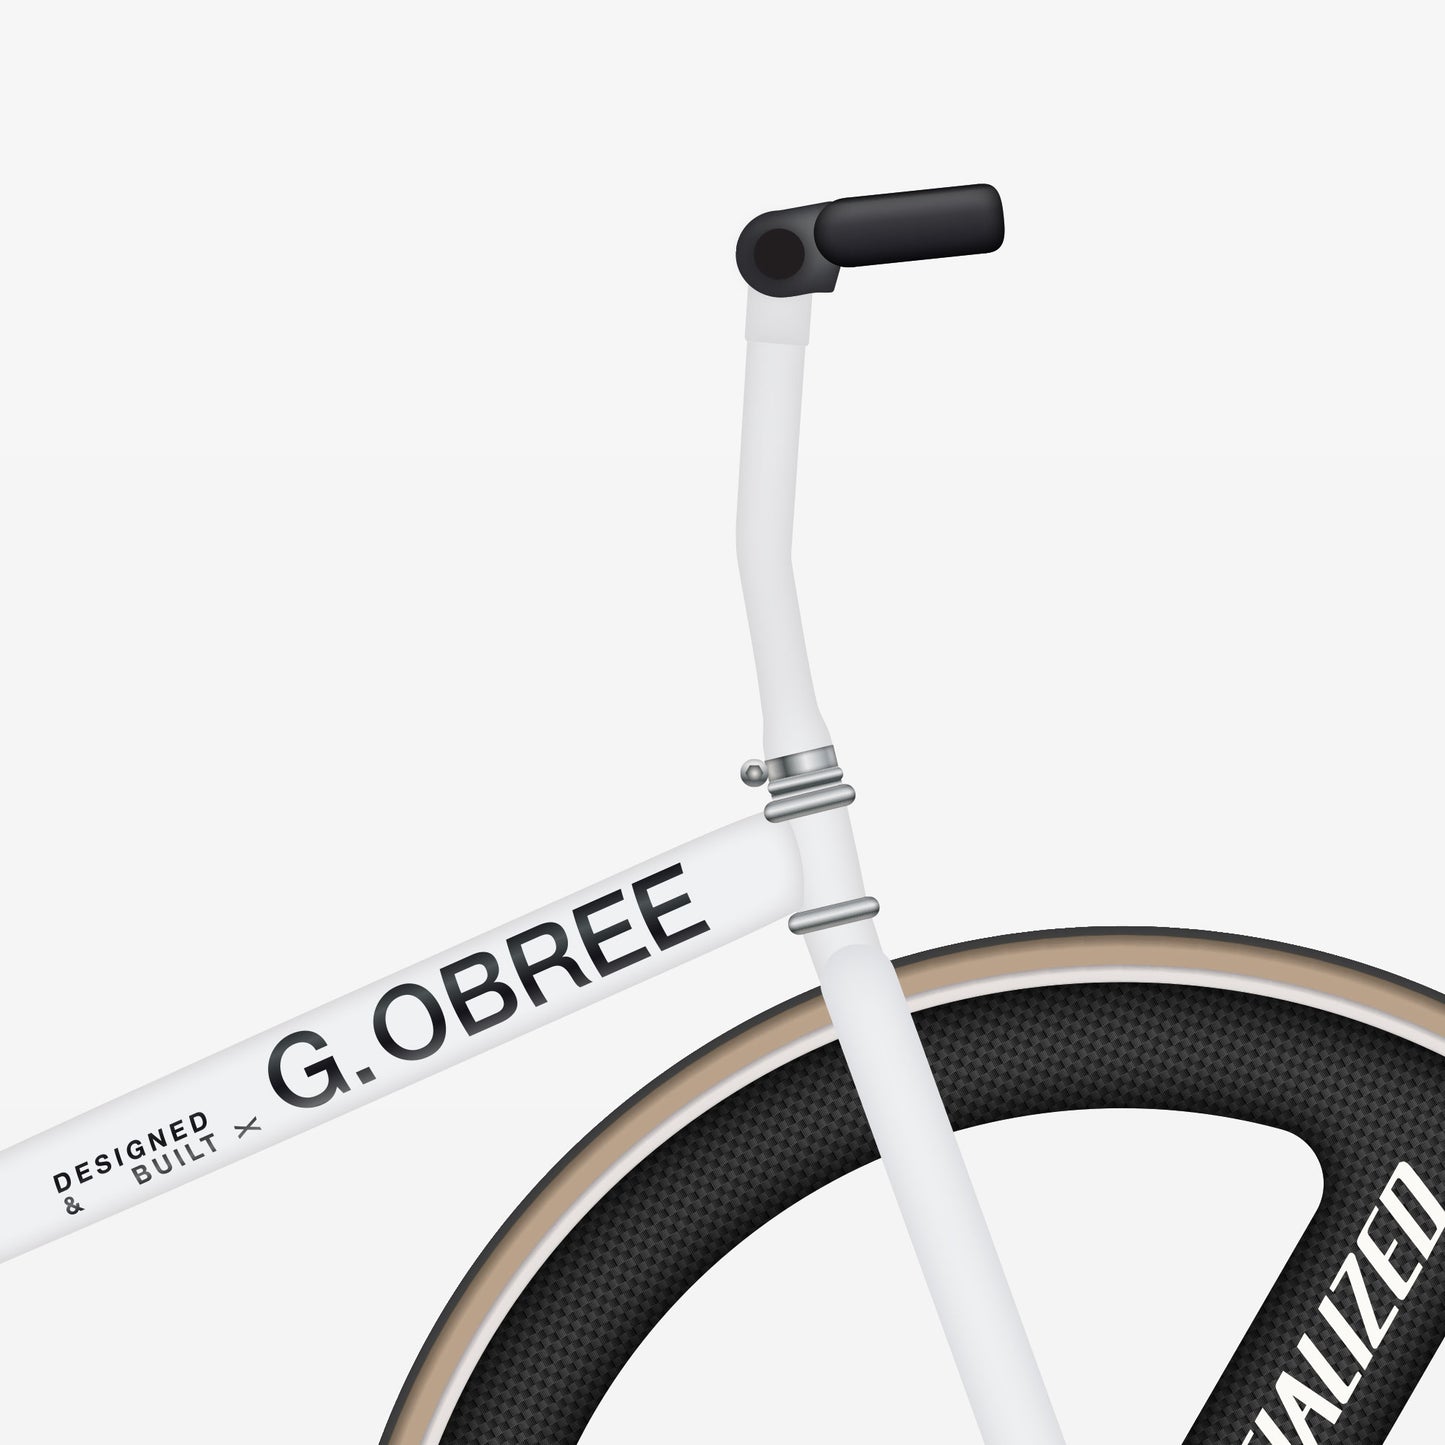 Graeme Obree Hour Record – Poster – The English Cyclist